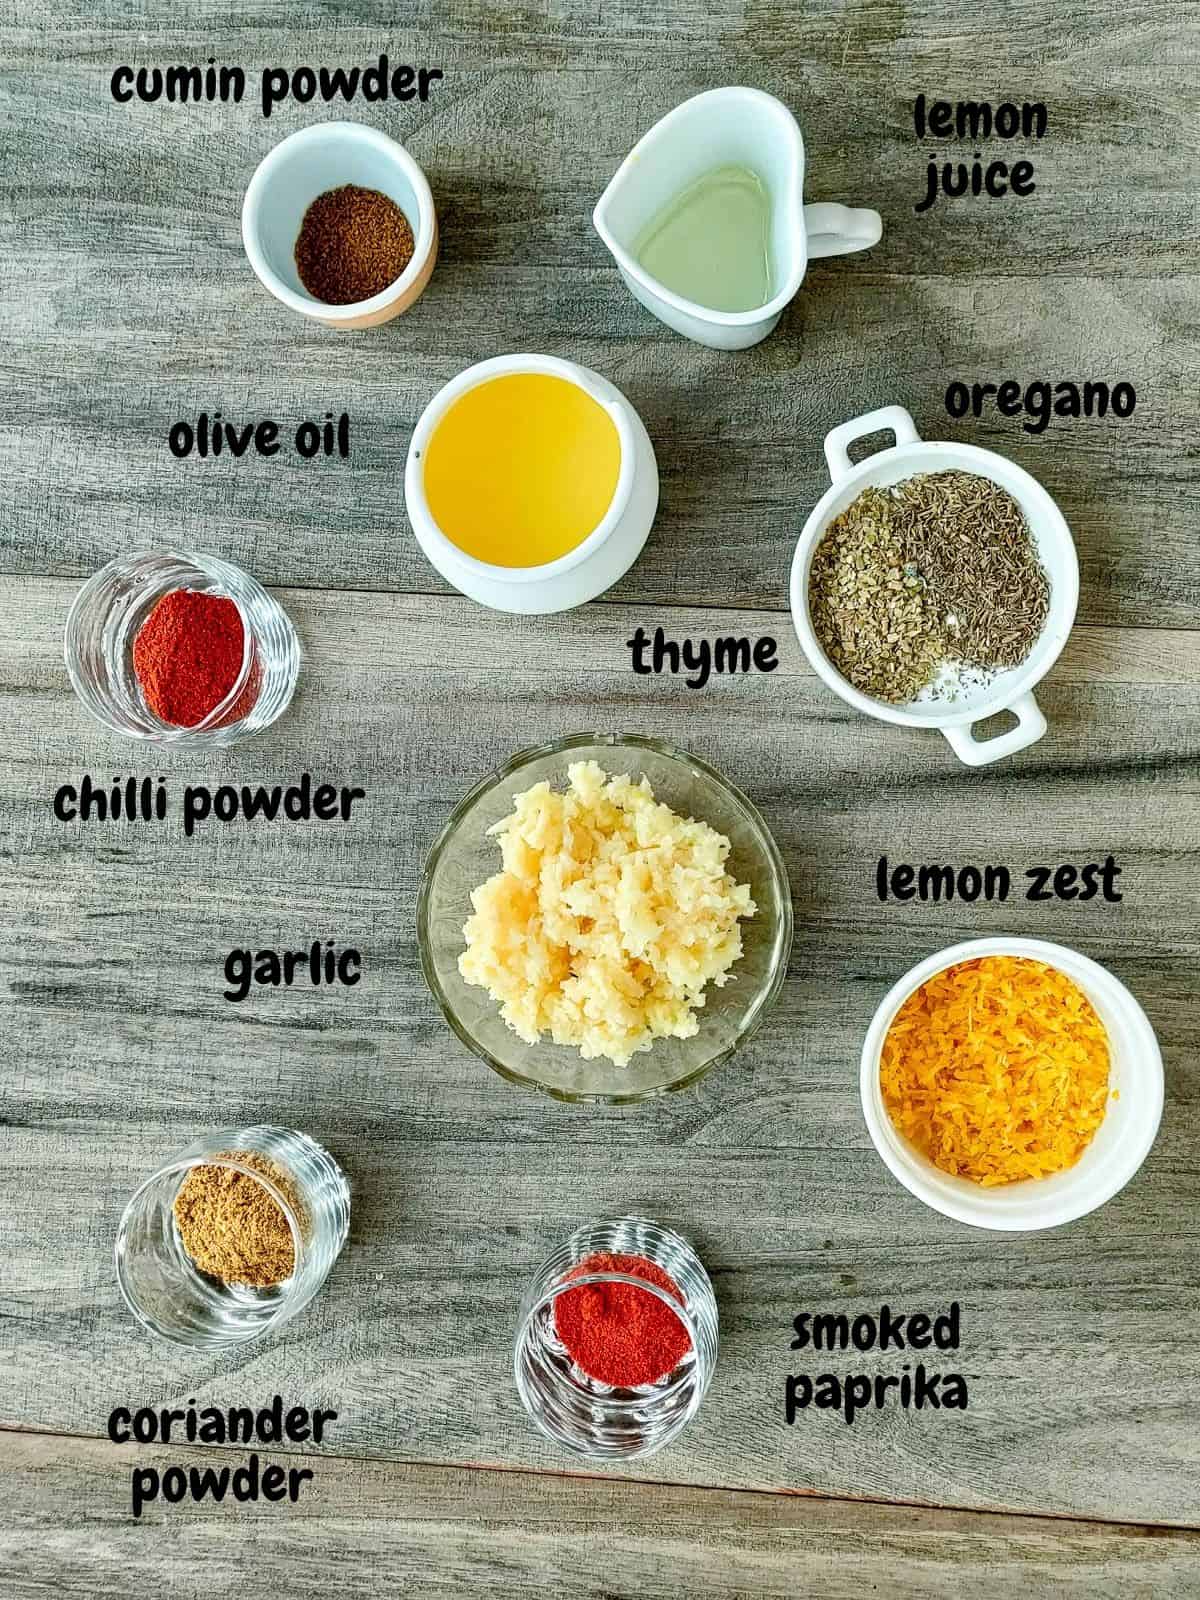 Labelled ingredients for herb and garlic seasoning.